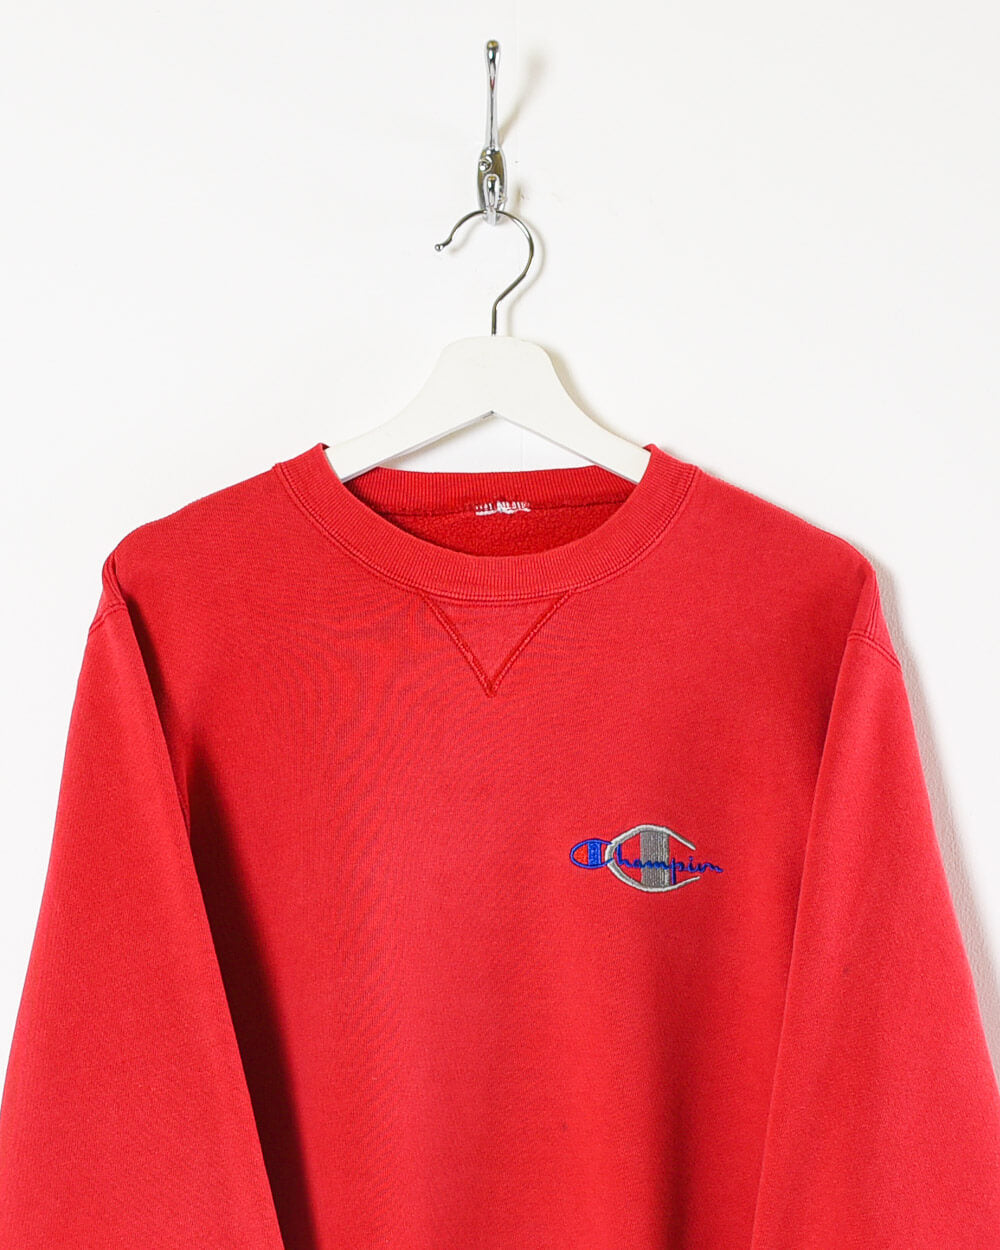 Red Champion Sweatshirt - Medium